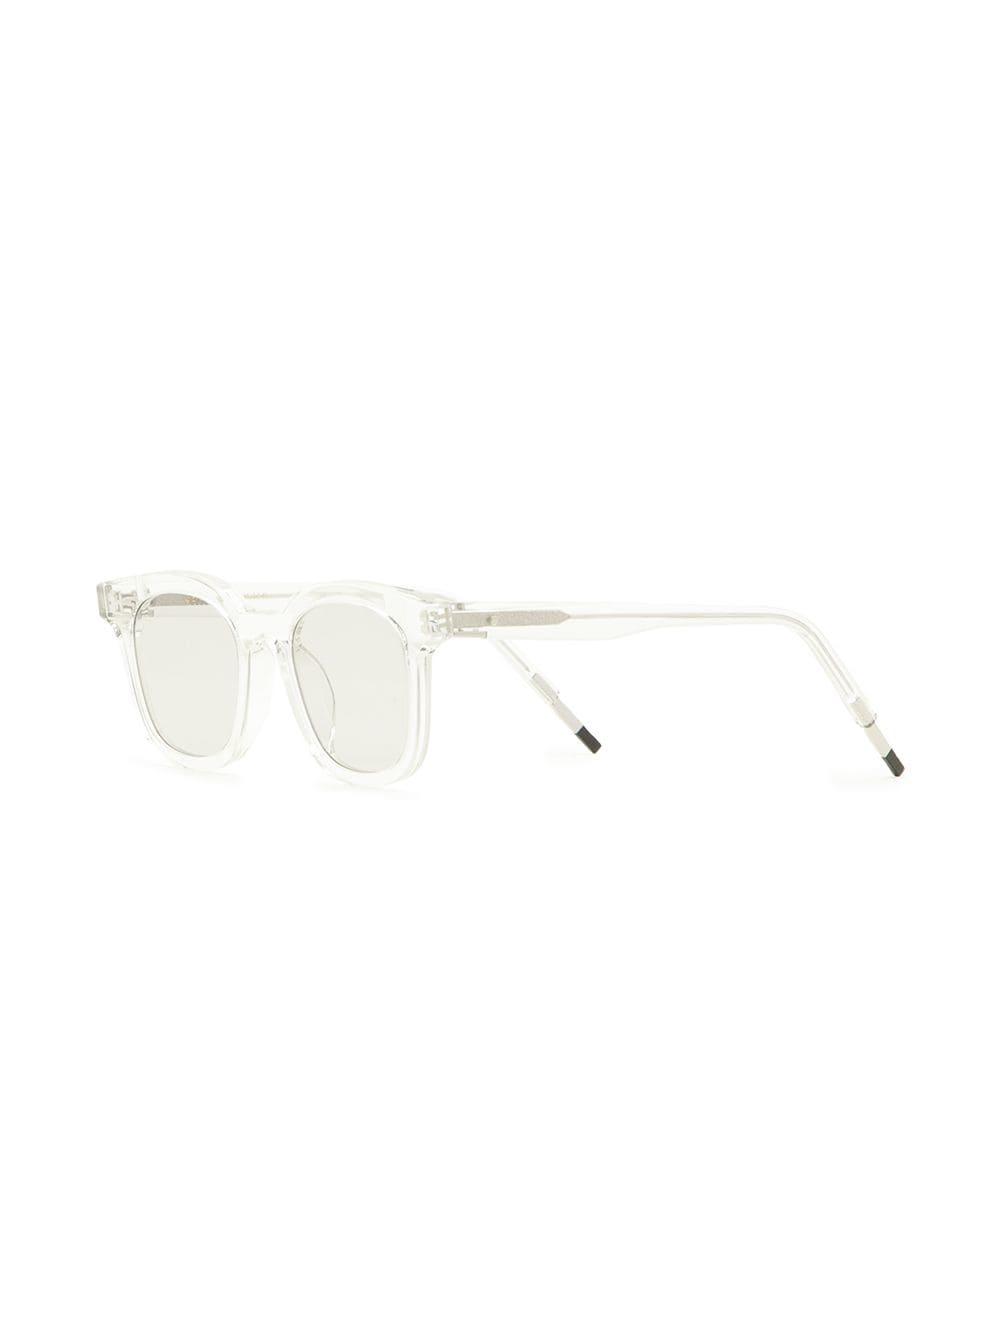 Gentle Monster Dal Lake C1 Sunglasses in White - Lyst